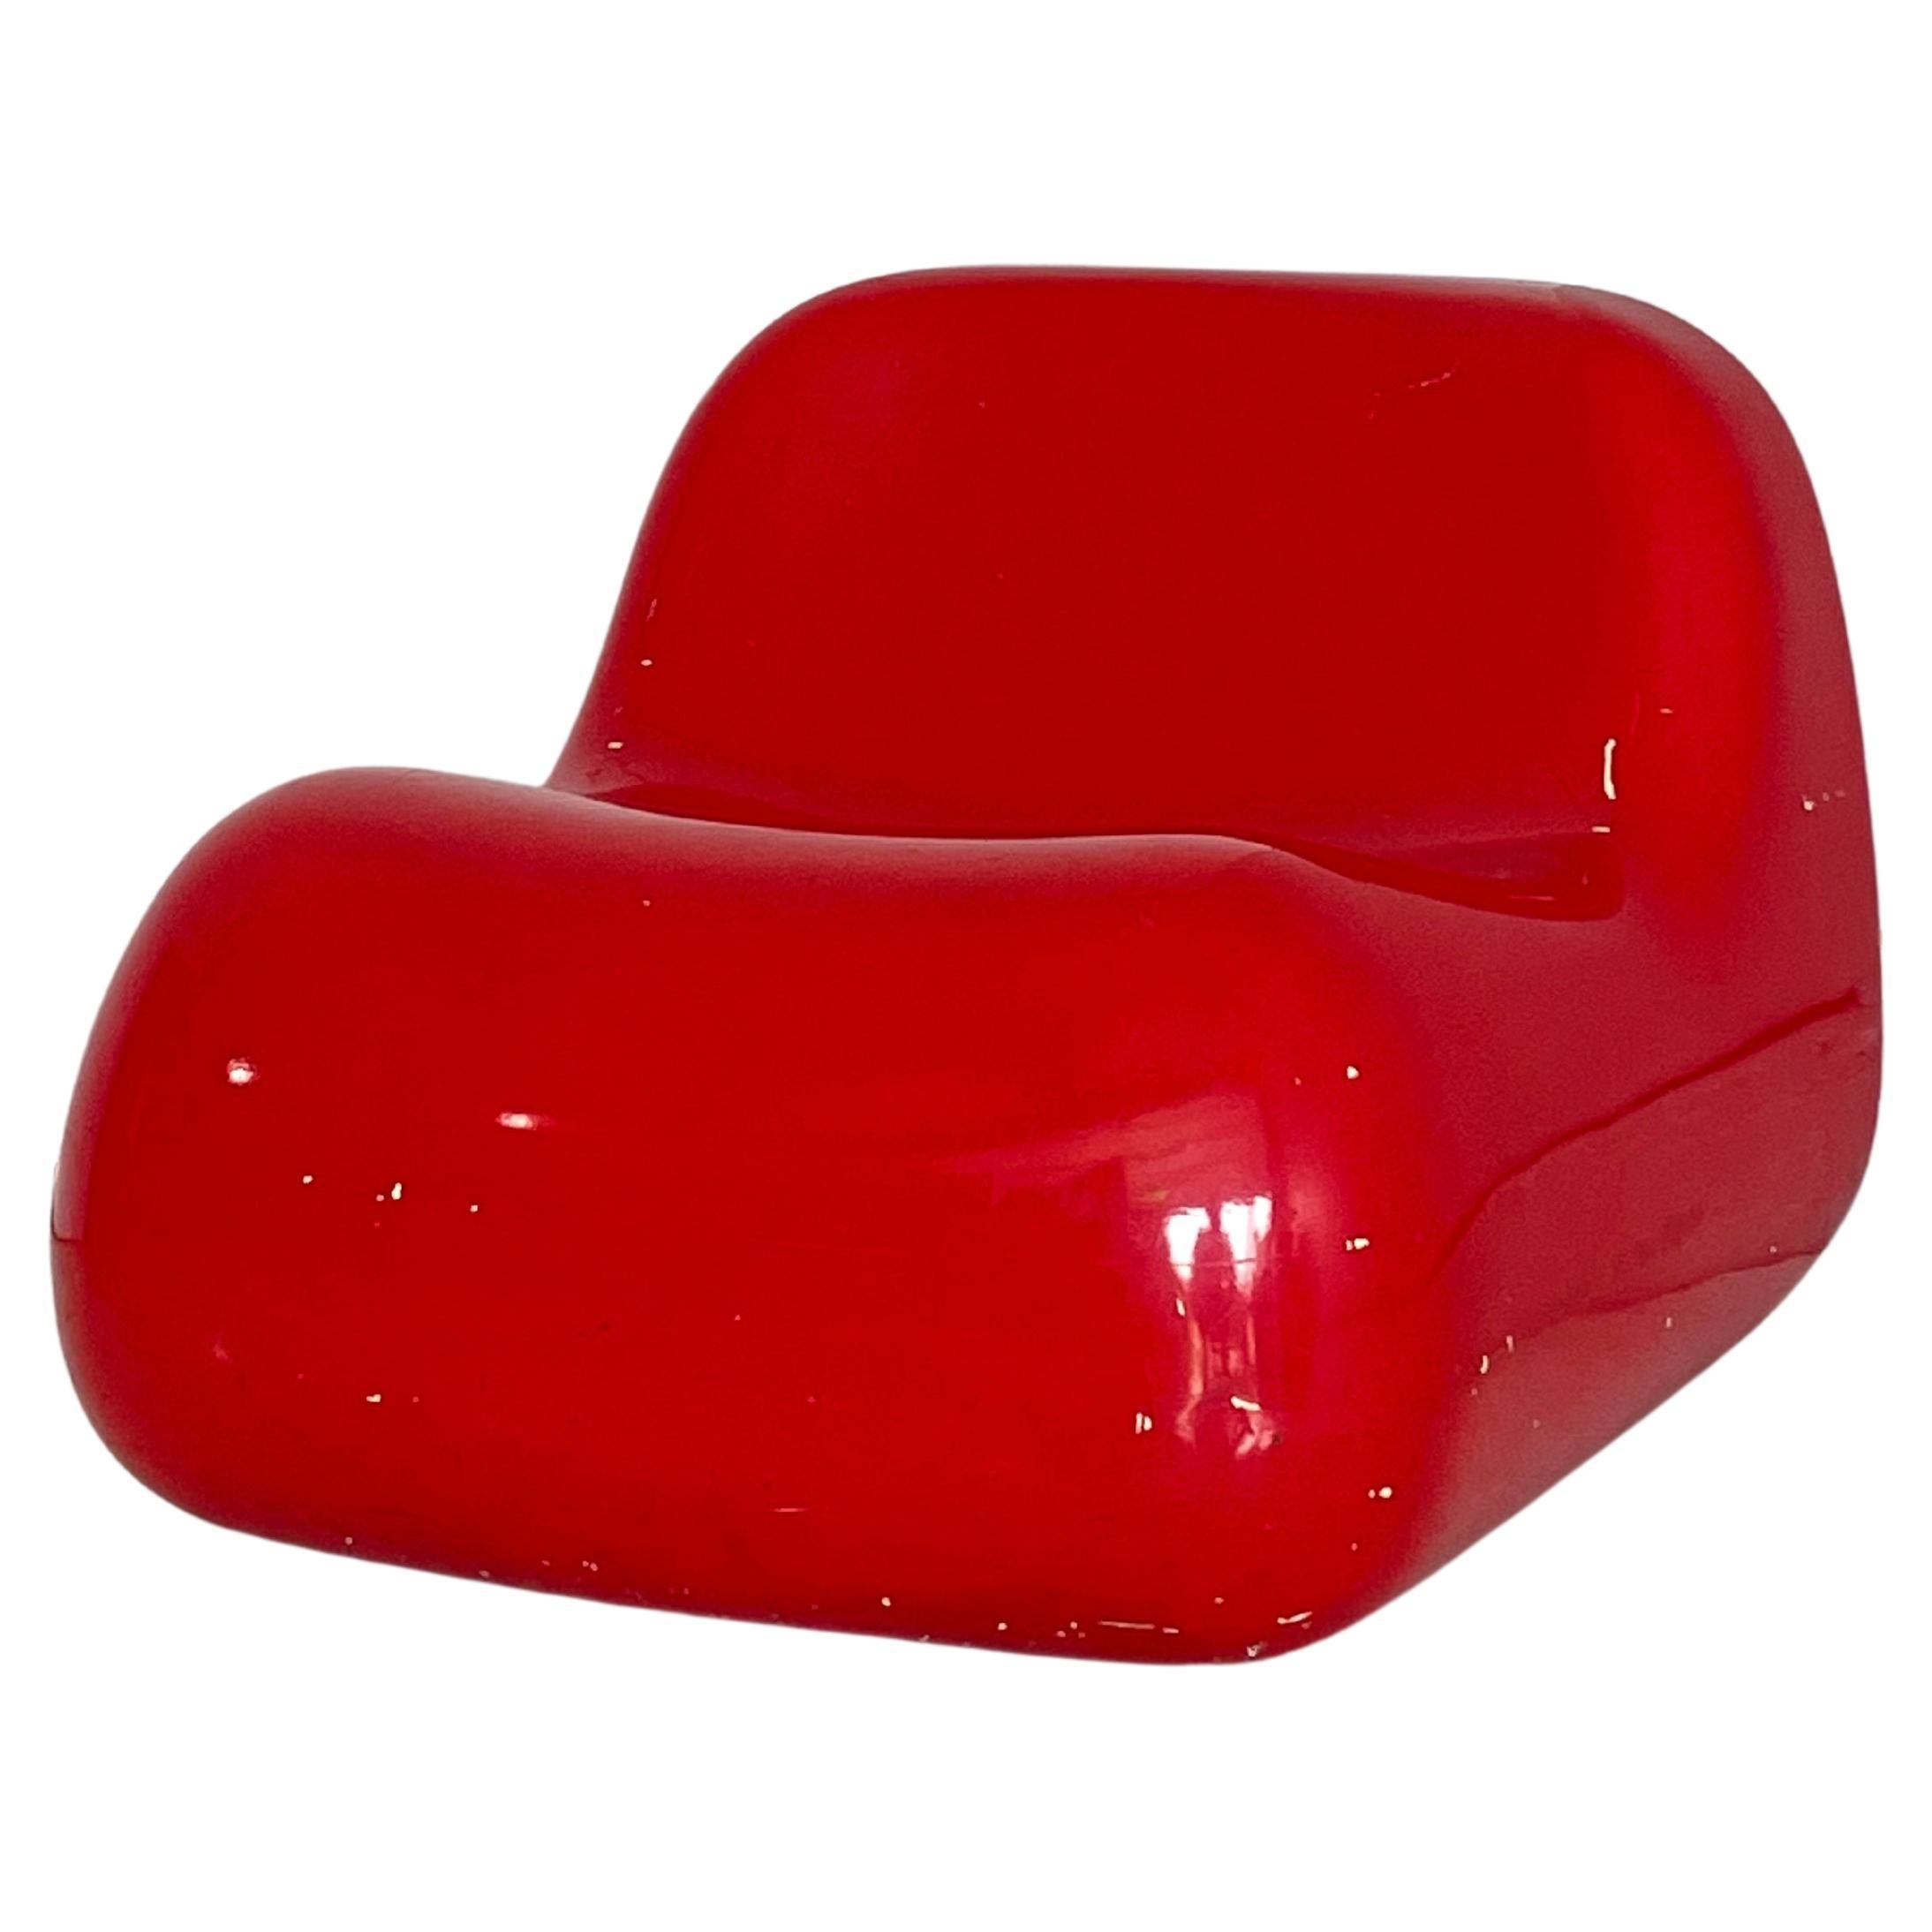 Alberto Rosselli Jumbo Chair, Saporiti, Italy 1968 For Sale